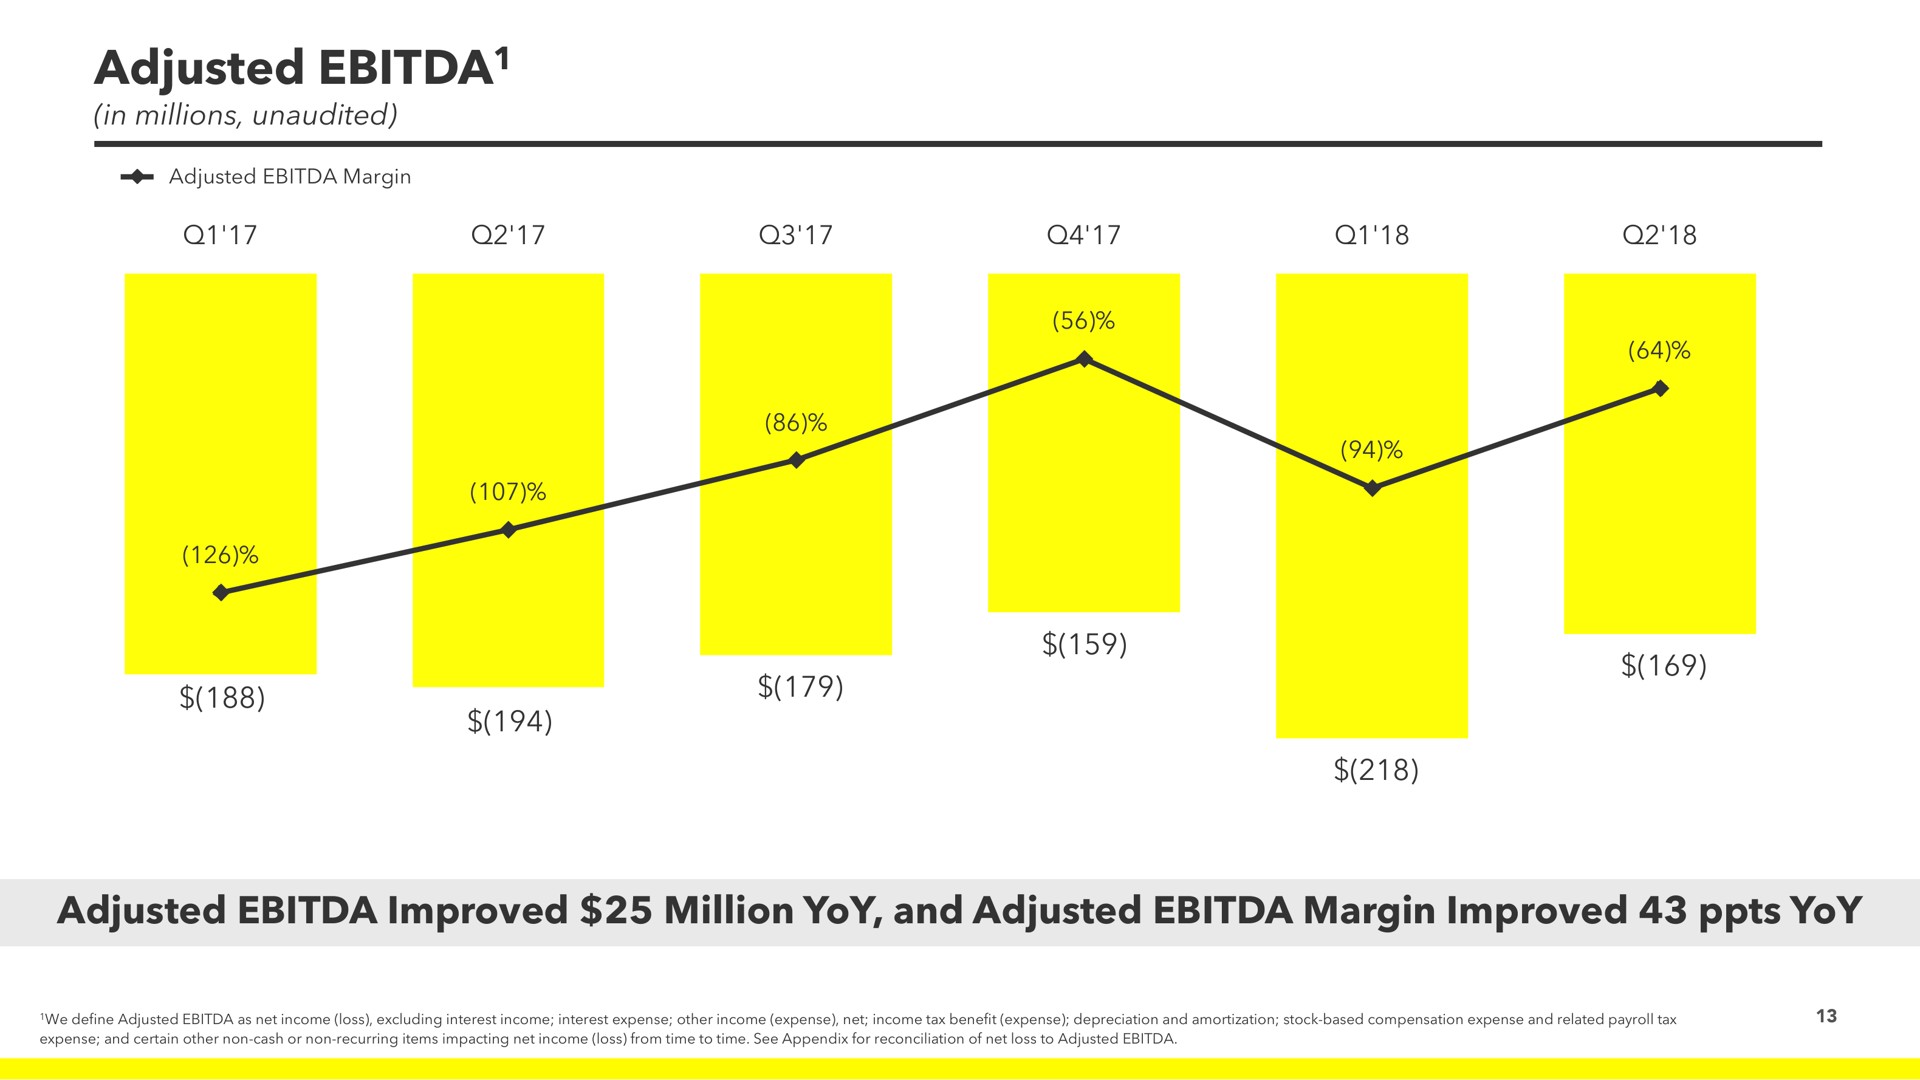 adjusted adjusted improved million yoy and adjusted margin improved yoy | Snap Inc